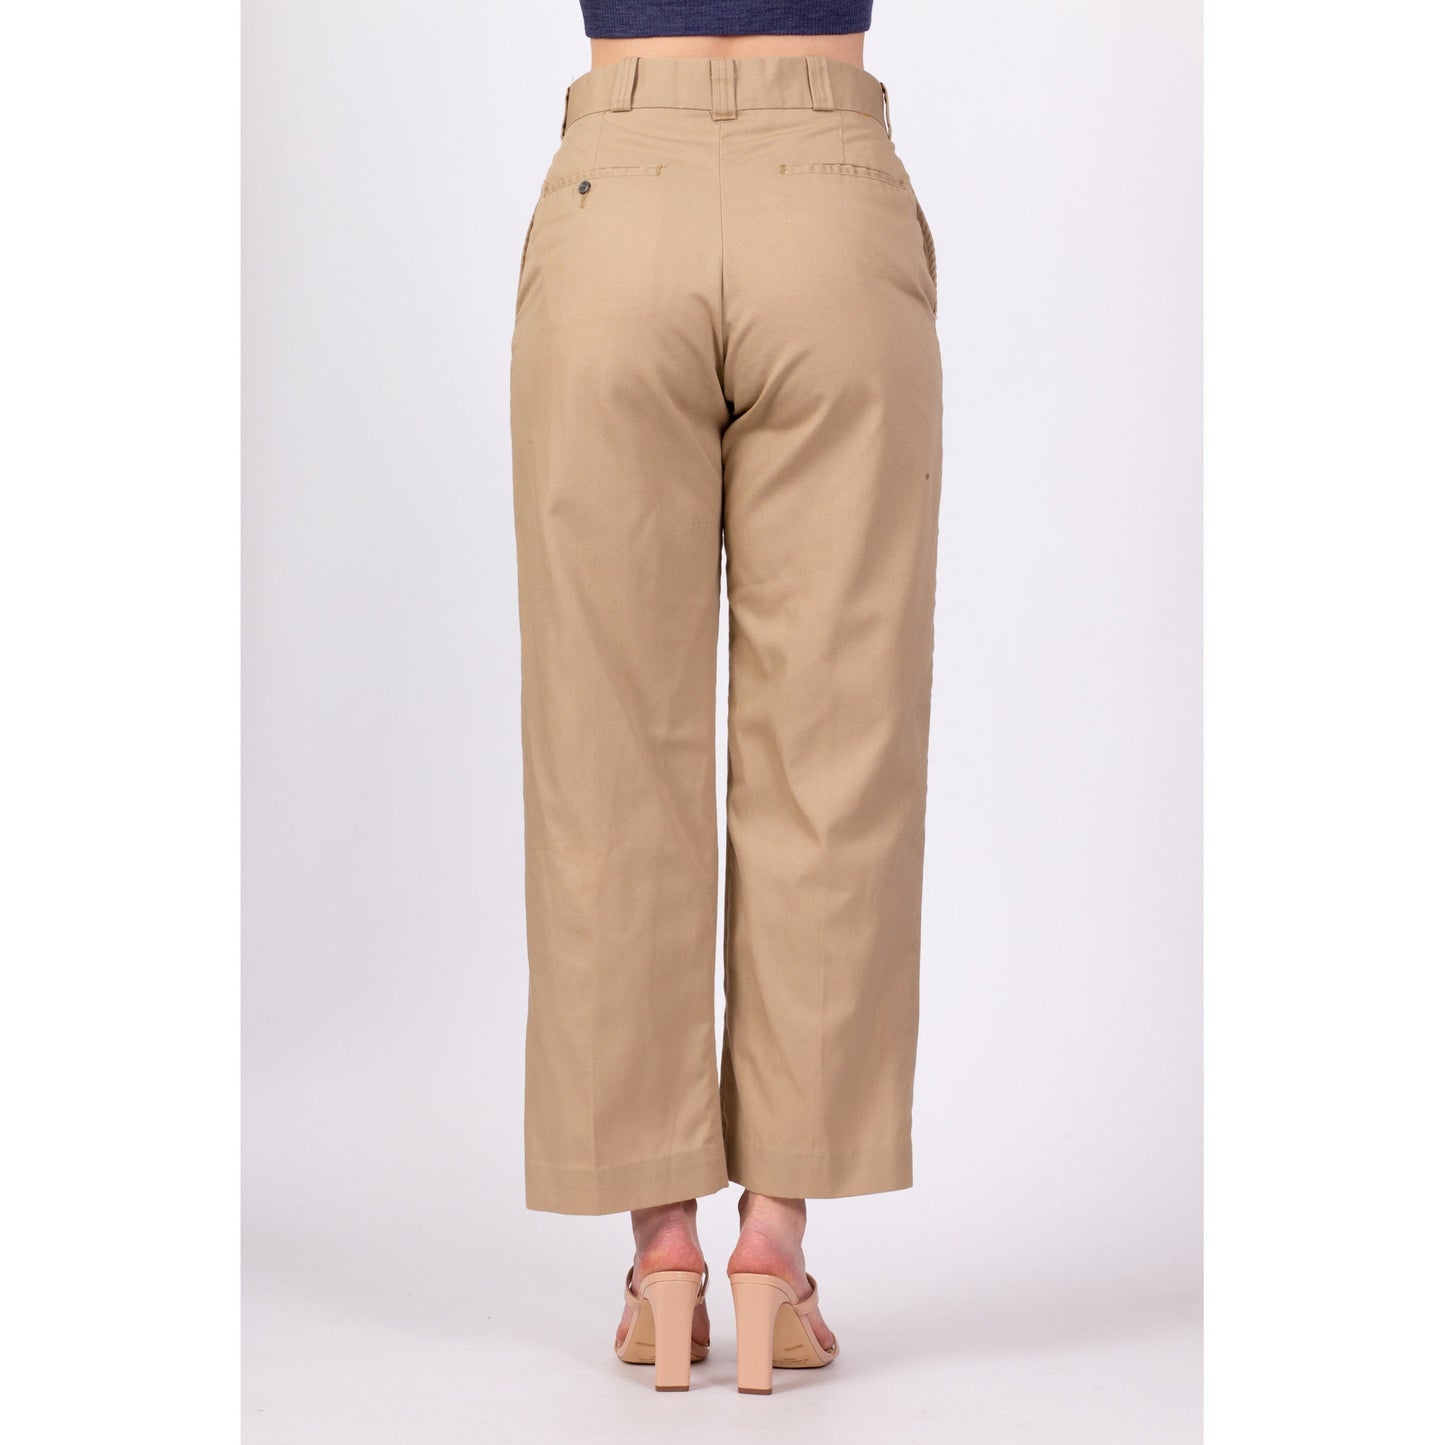 70s Khaki Straight Leg Pants - Men's Small, Women's Medium, 29.5"